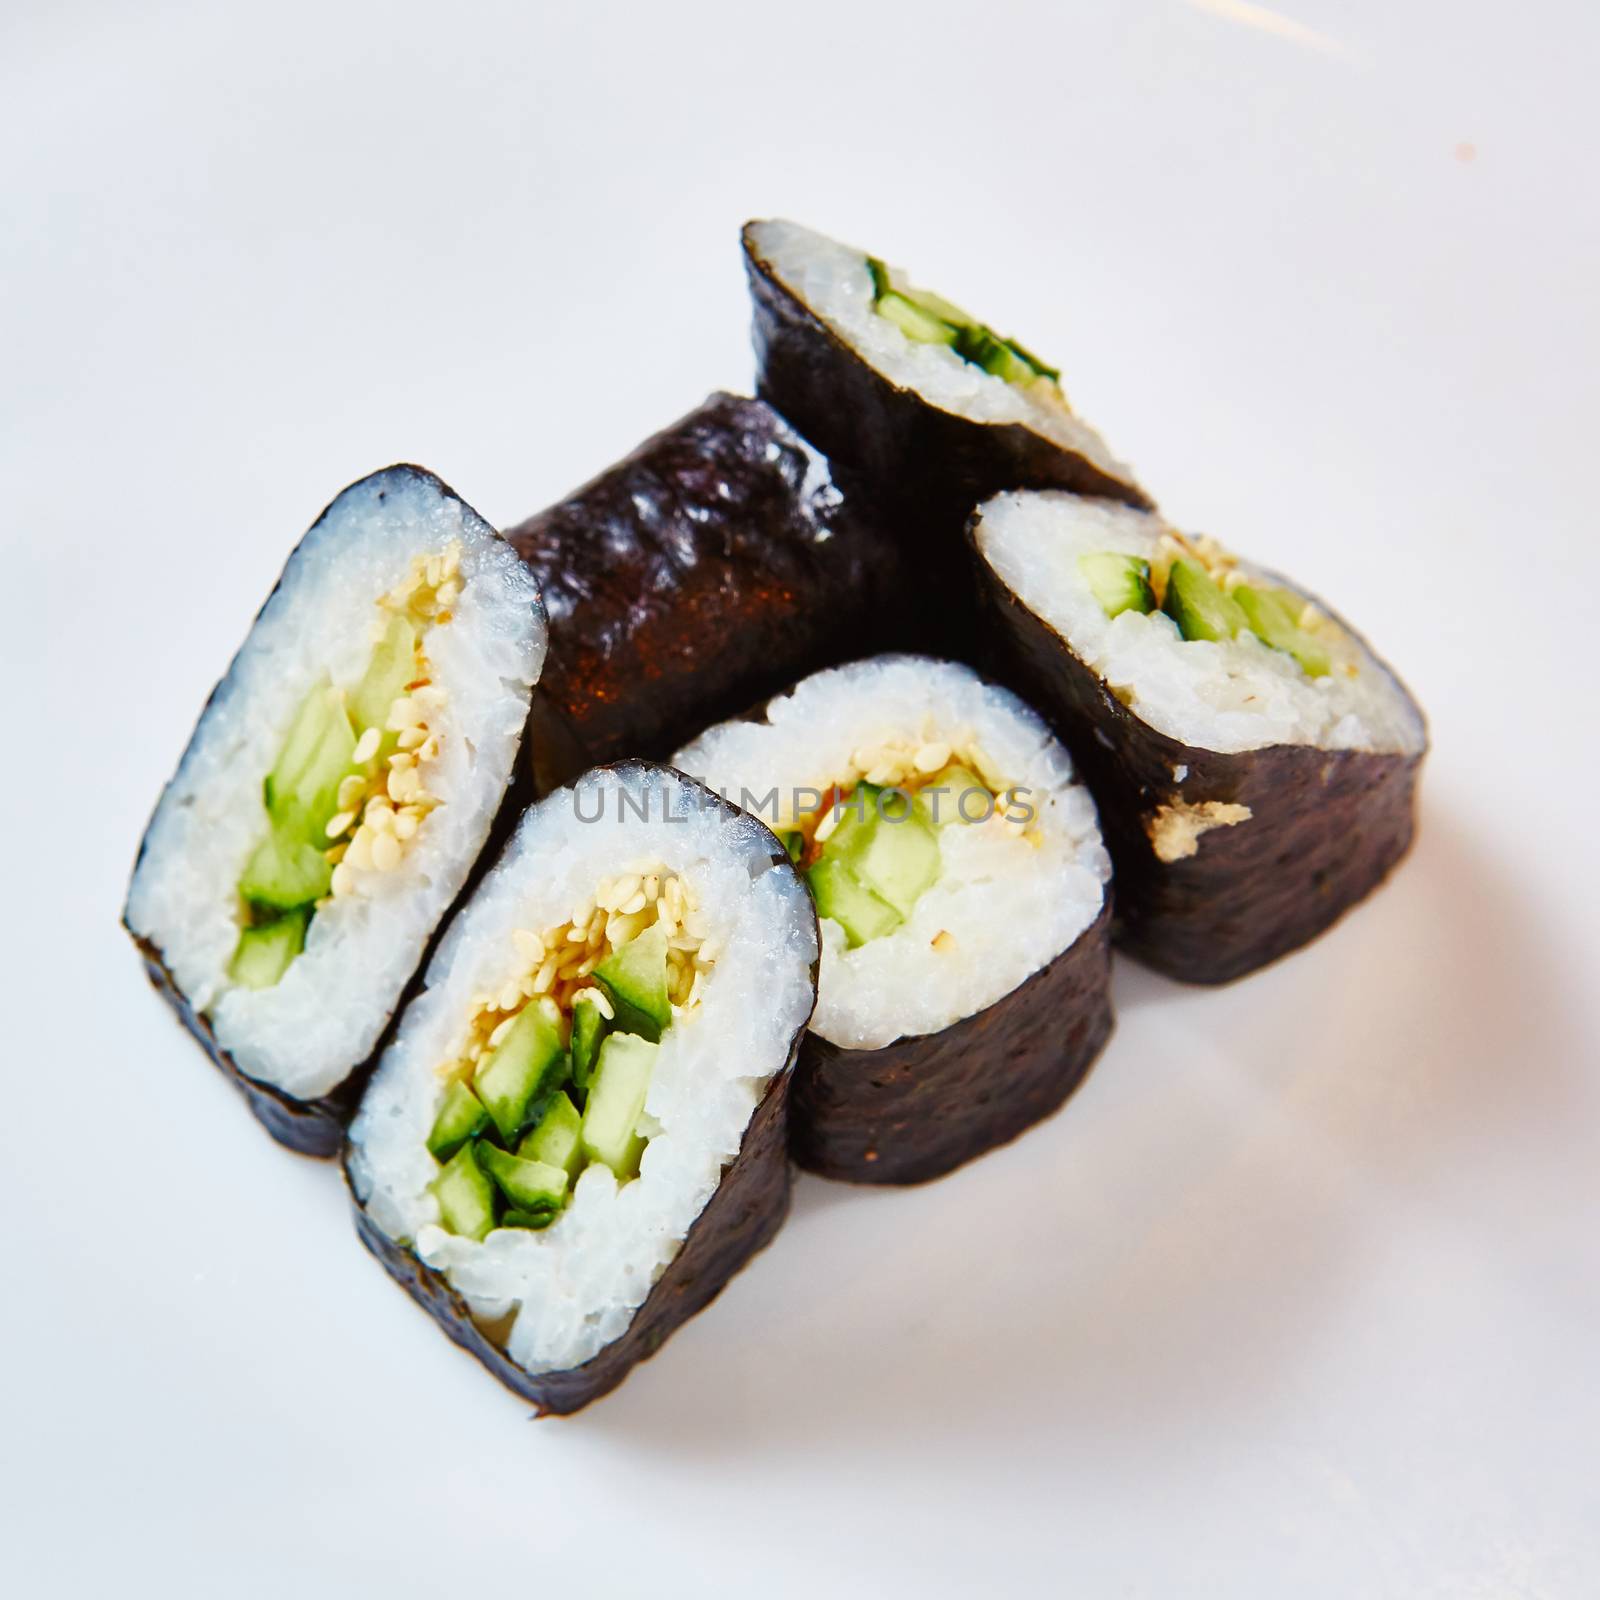 Japanese food restaurant - sushi rolls. Shallow dof